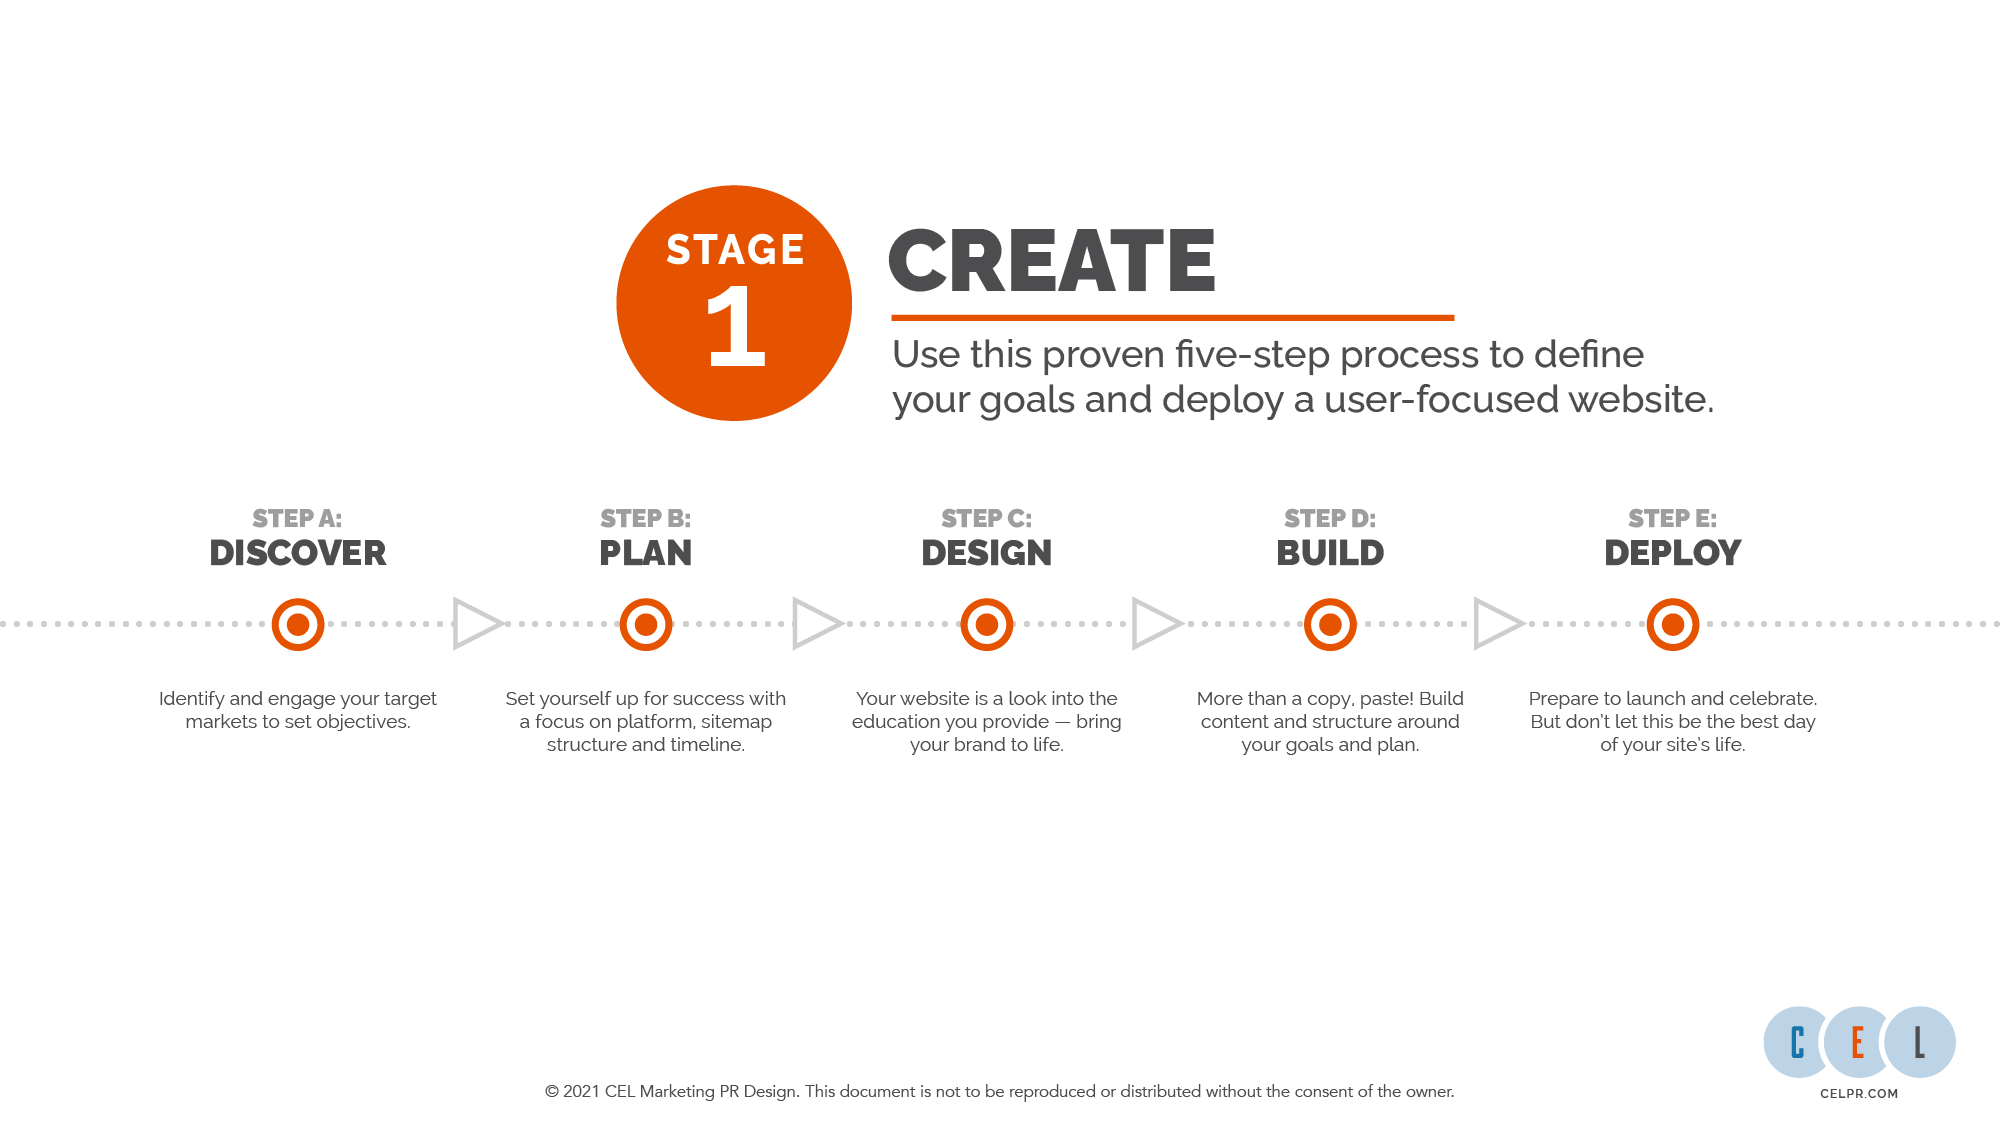 stage 1 create step a discover b plan c design d build e deploy